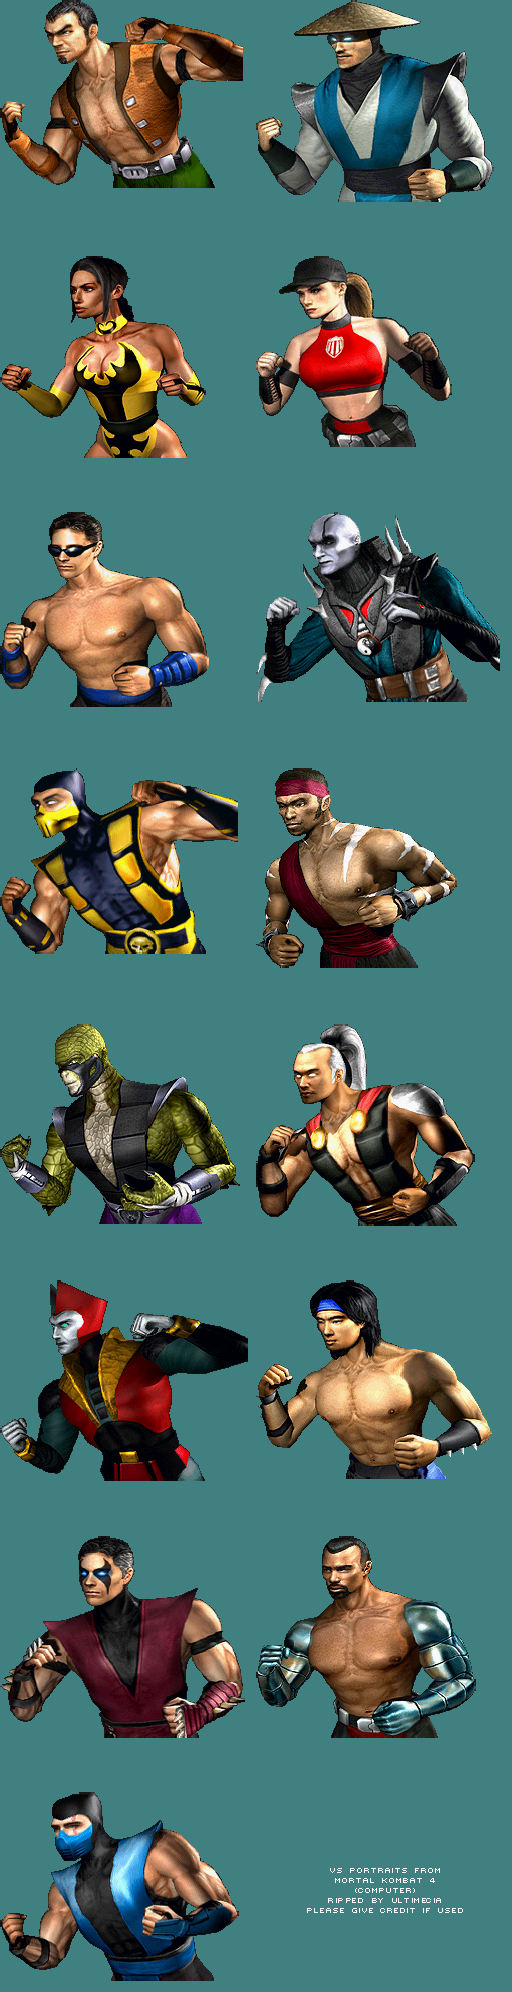 Mortal Kombat 4 - Portraits (Player 2)